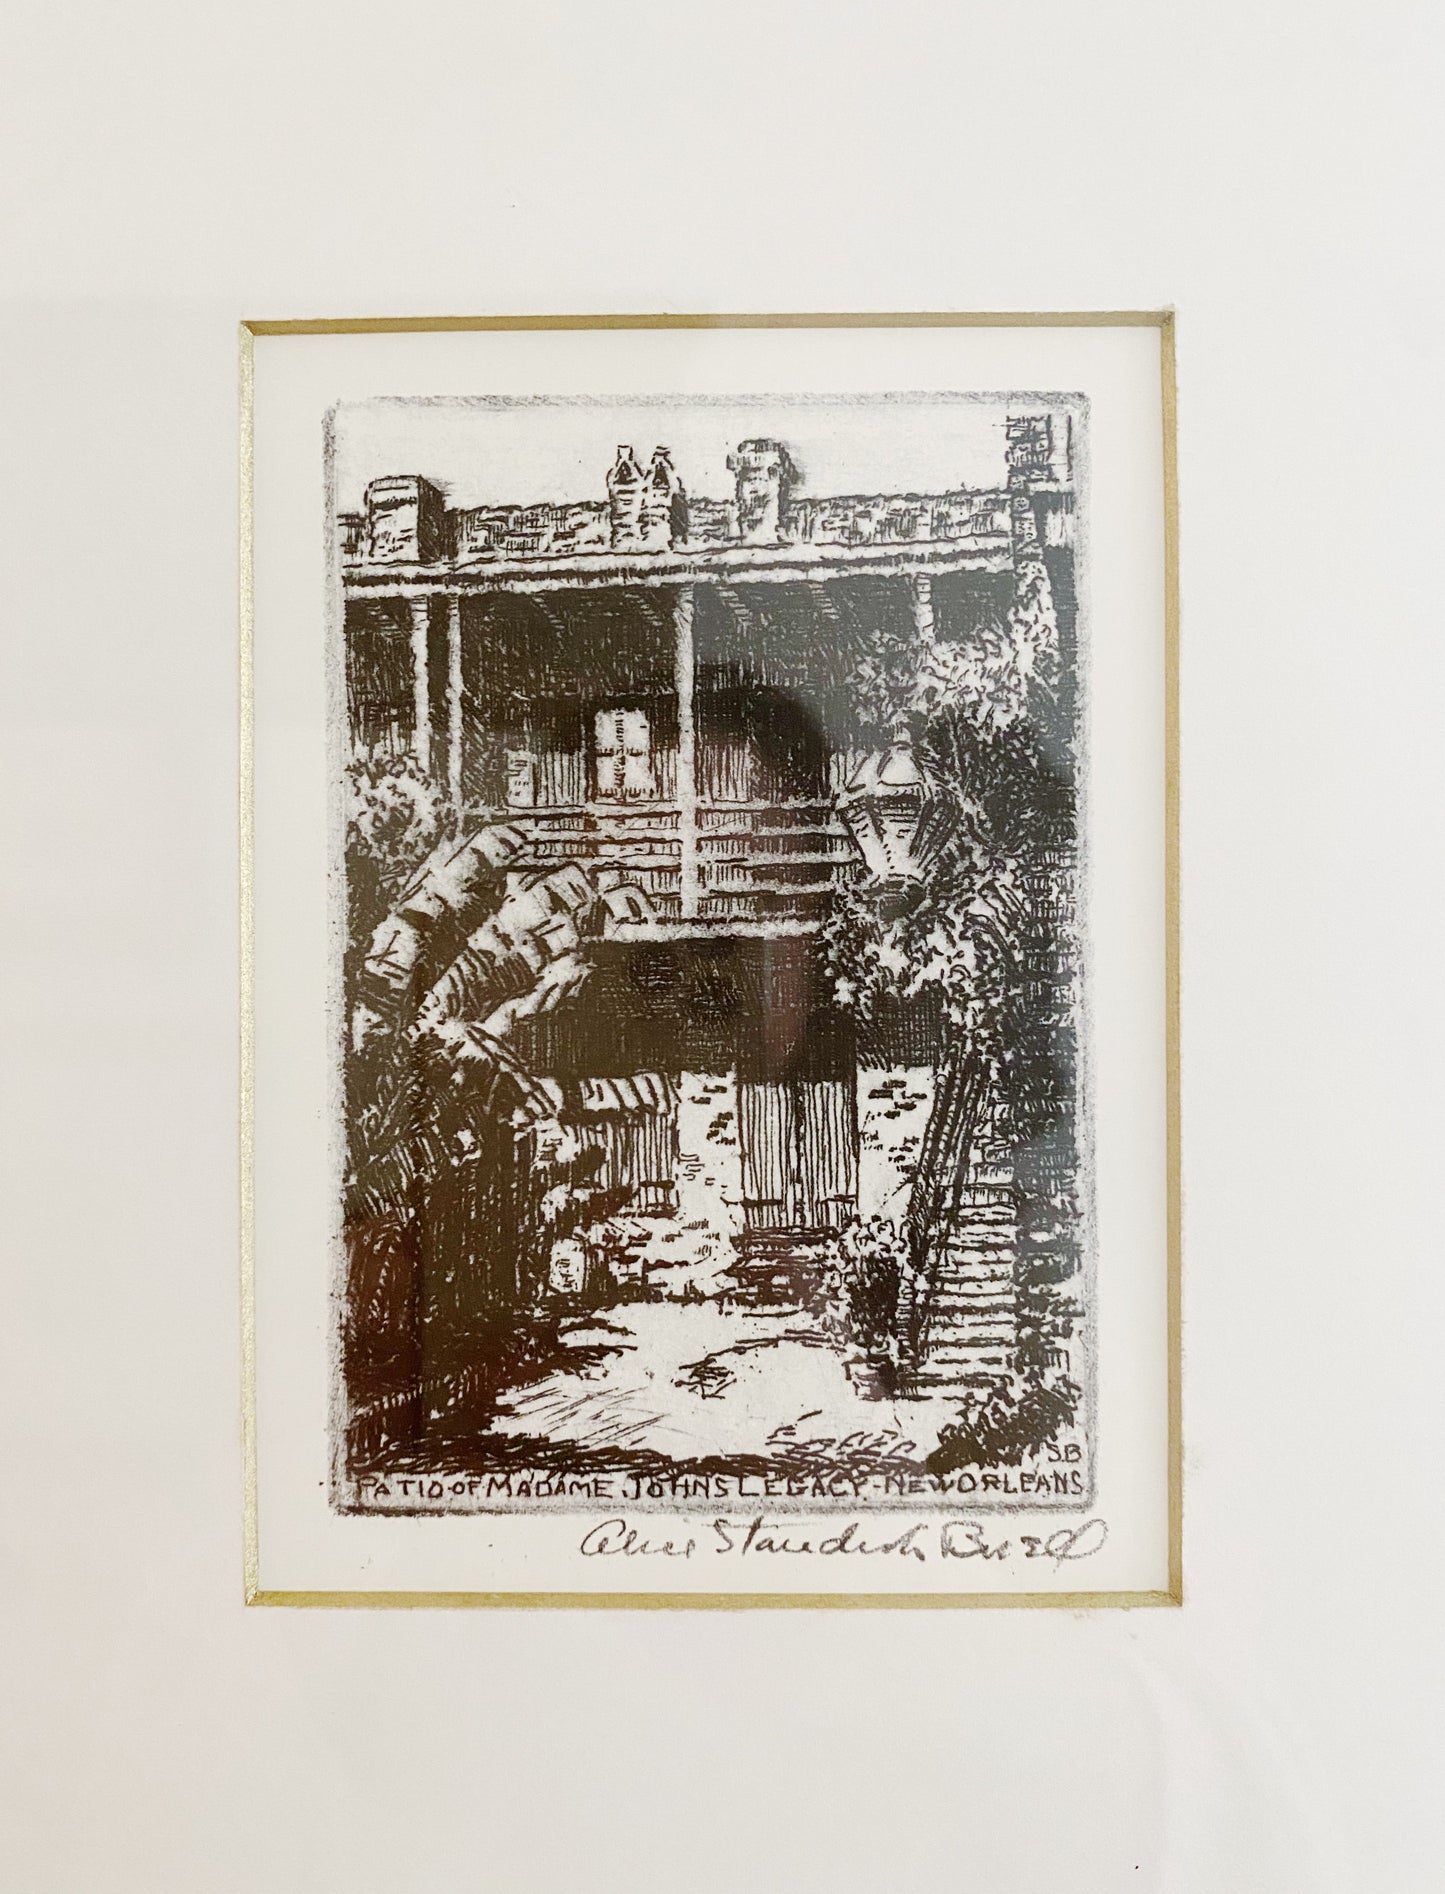 black and white print of patio of Madame John Legacy art